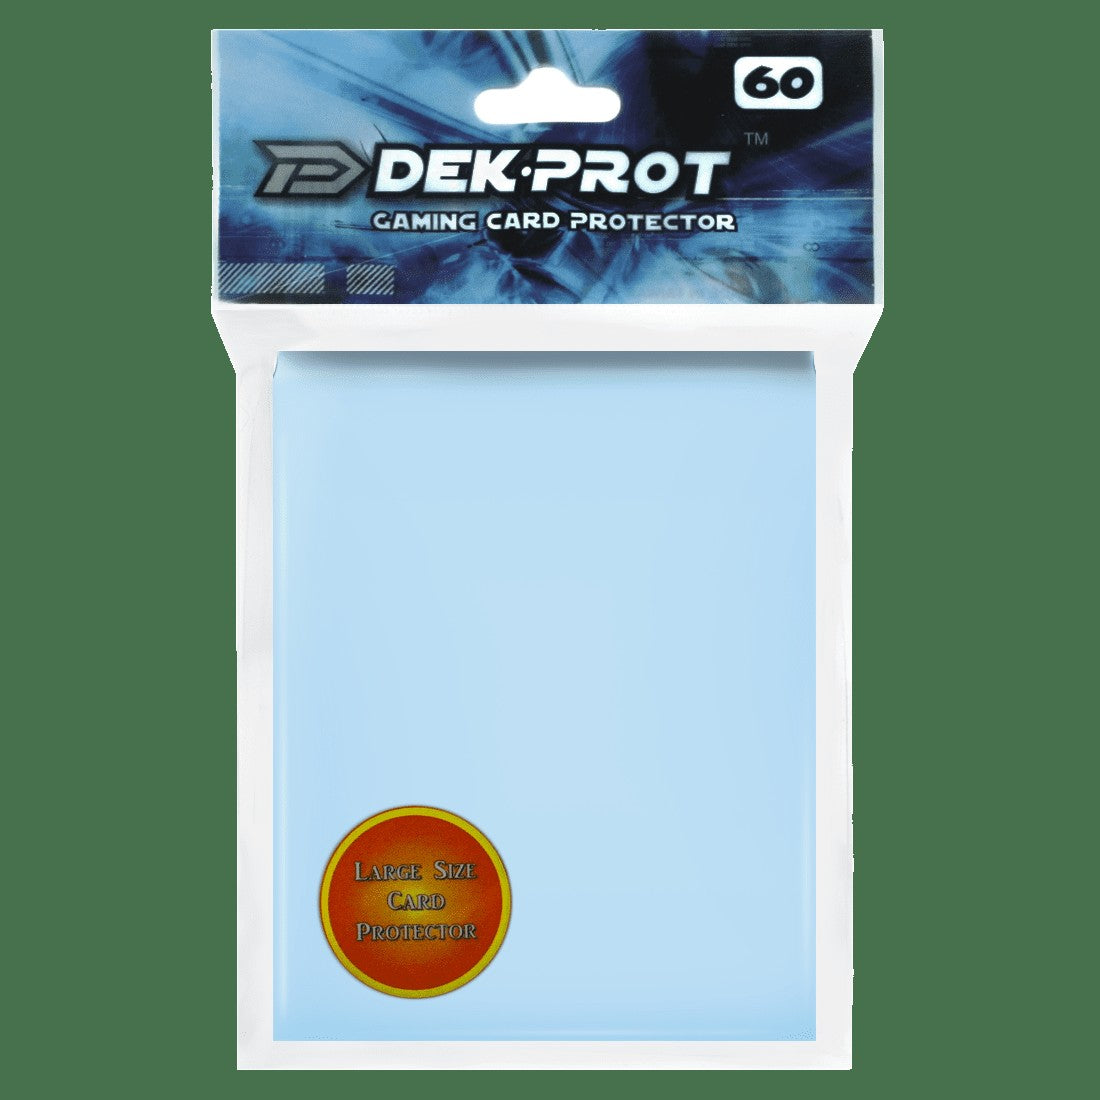 Dek Prot Standard Sized Card Sleeves - Aqua Blue (60 Card Sleeves)